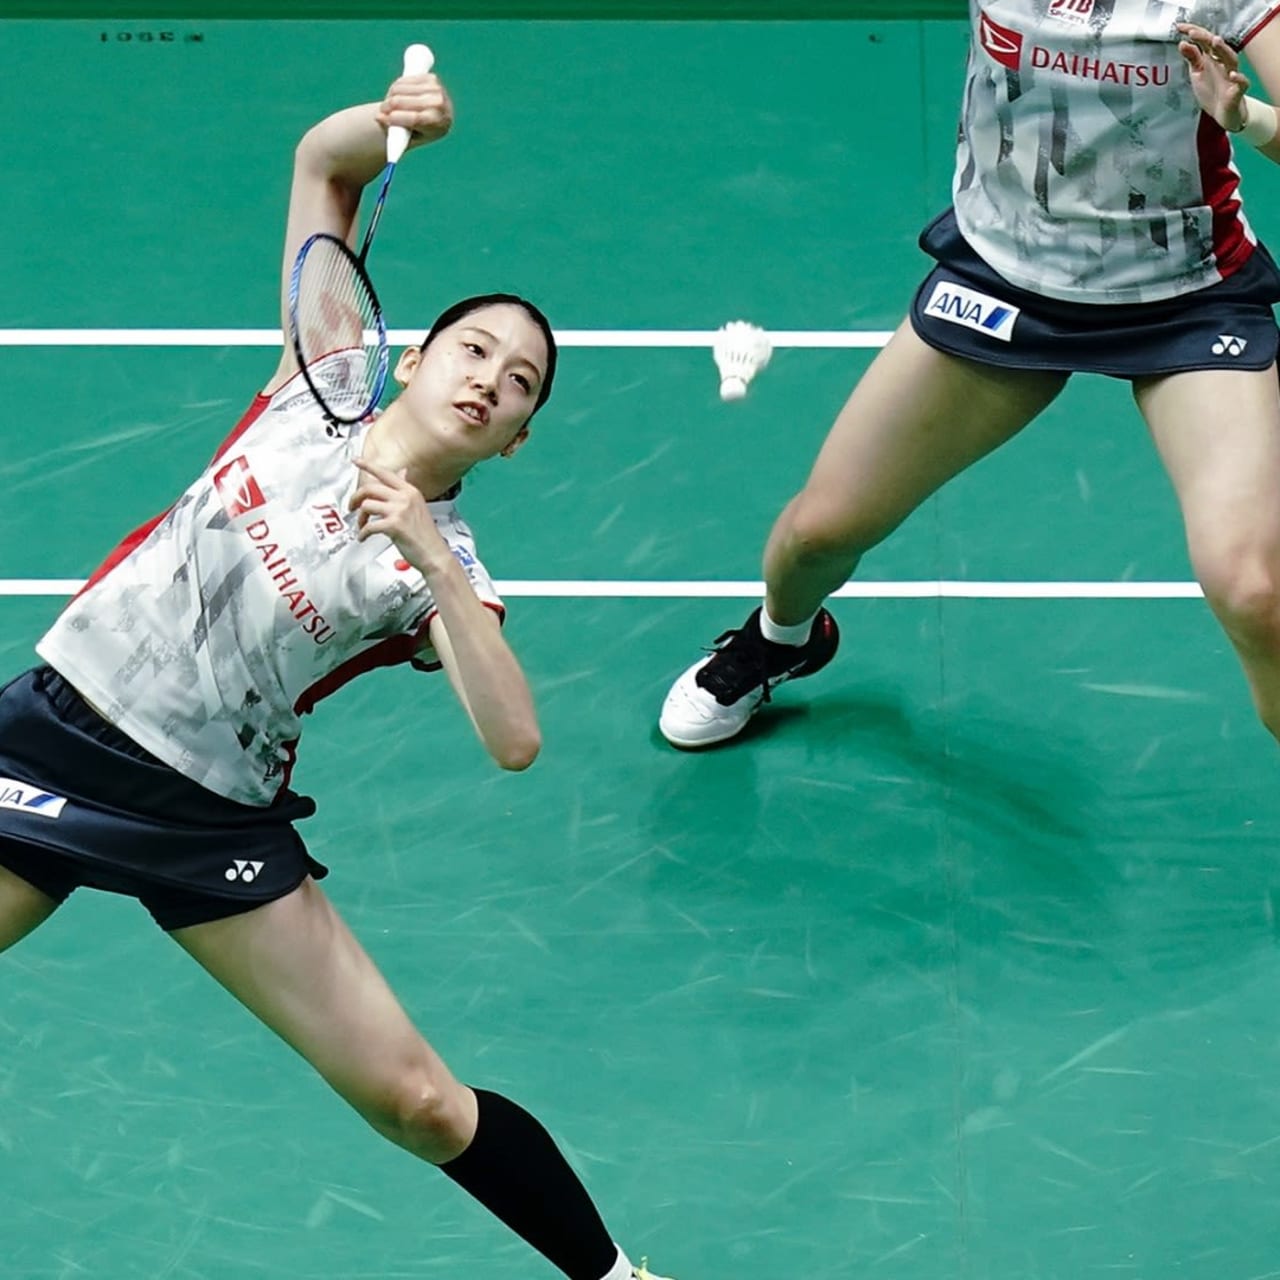 Badminton Olympic Qualifier Finals DAIHATSU Japan Open Tokyo Free Live Streaming